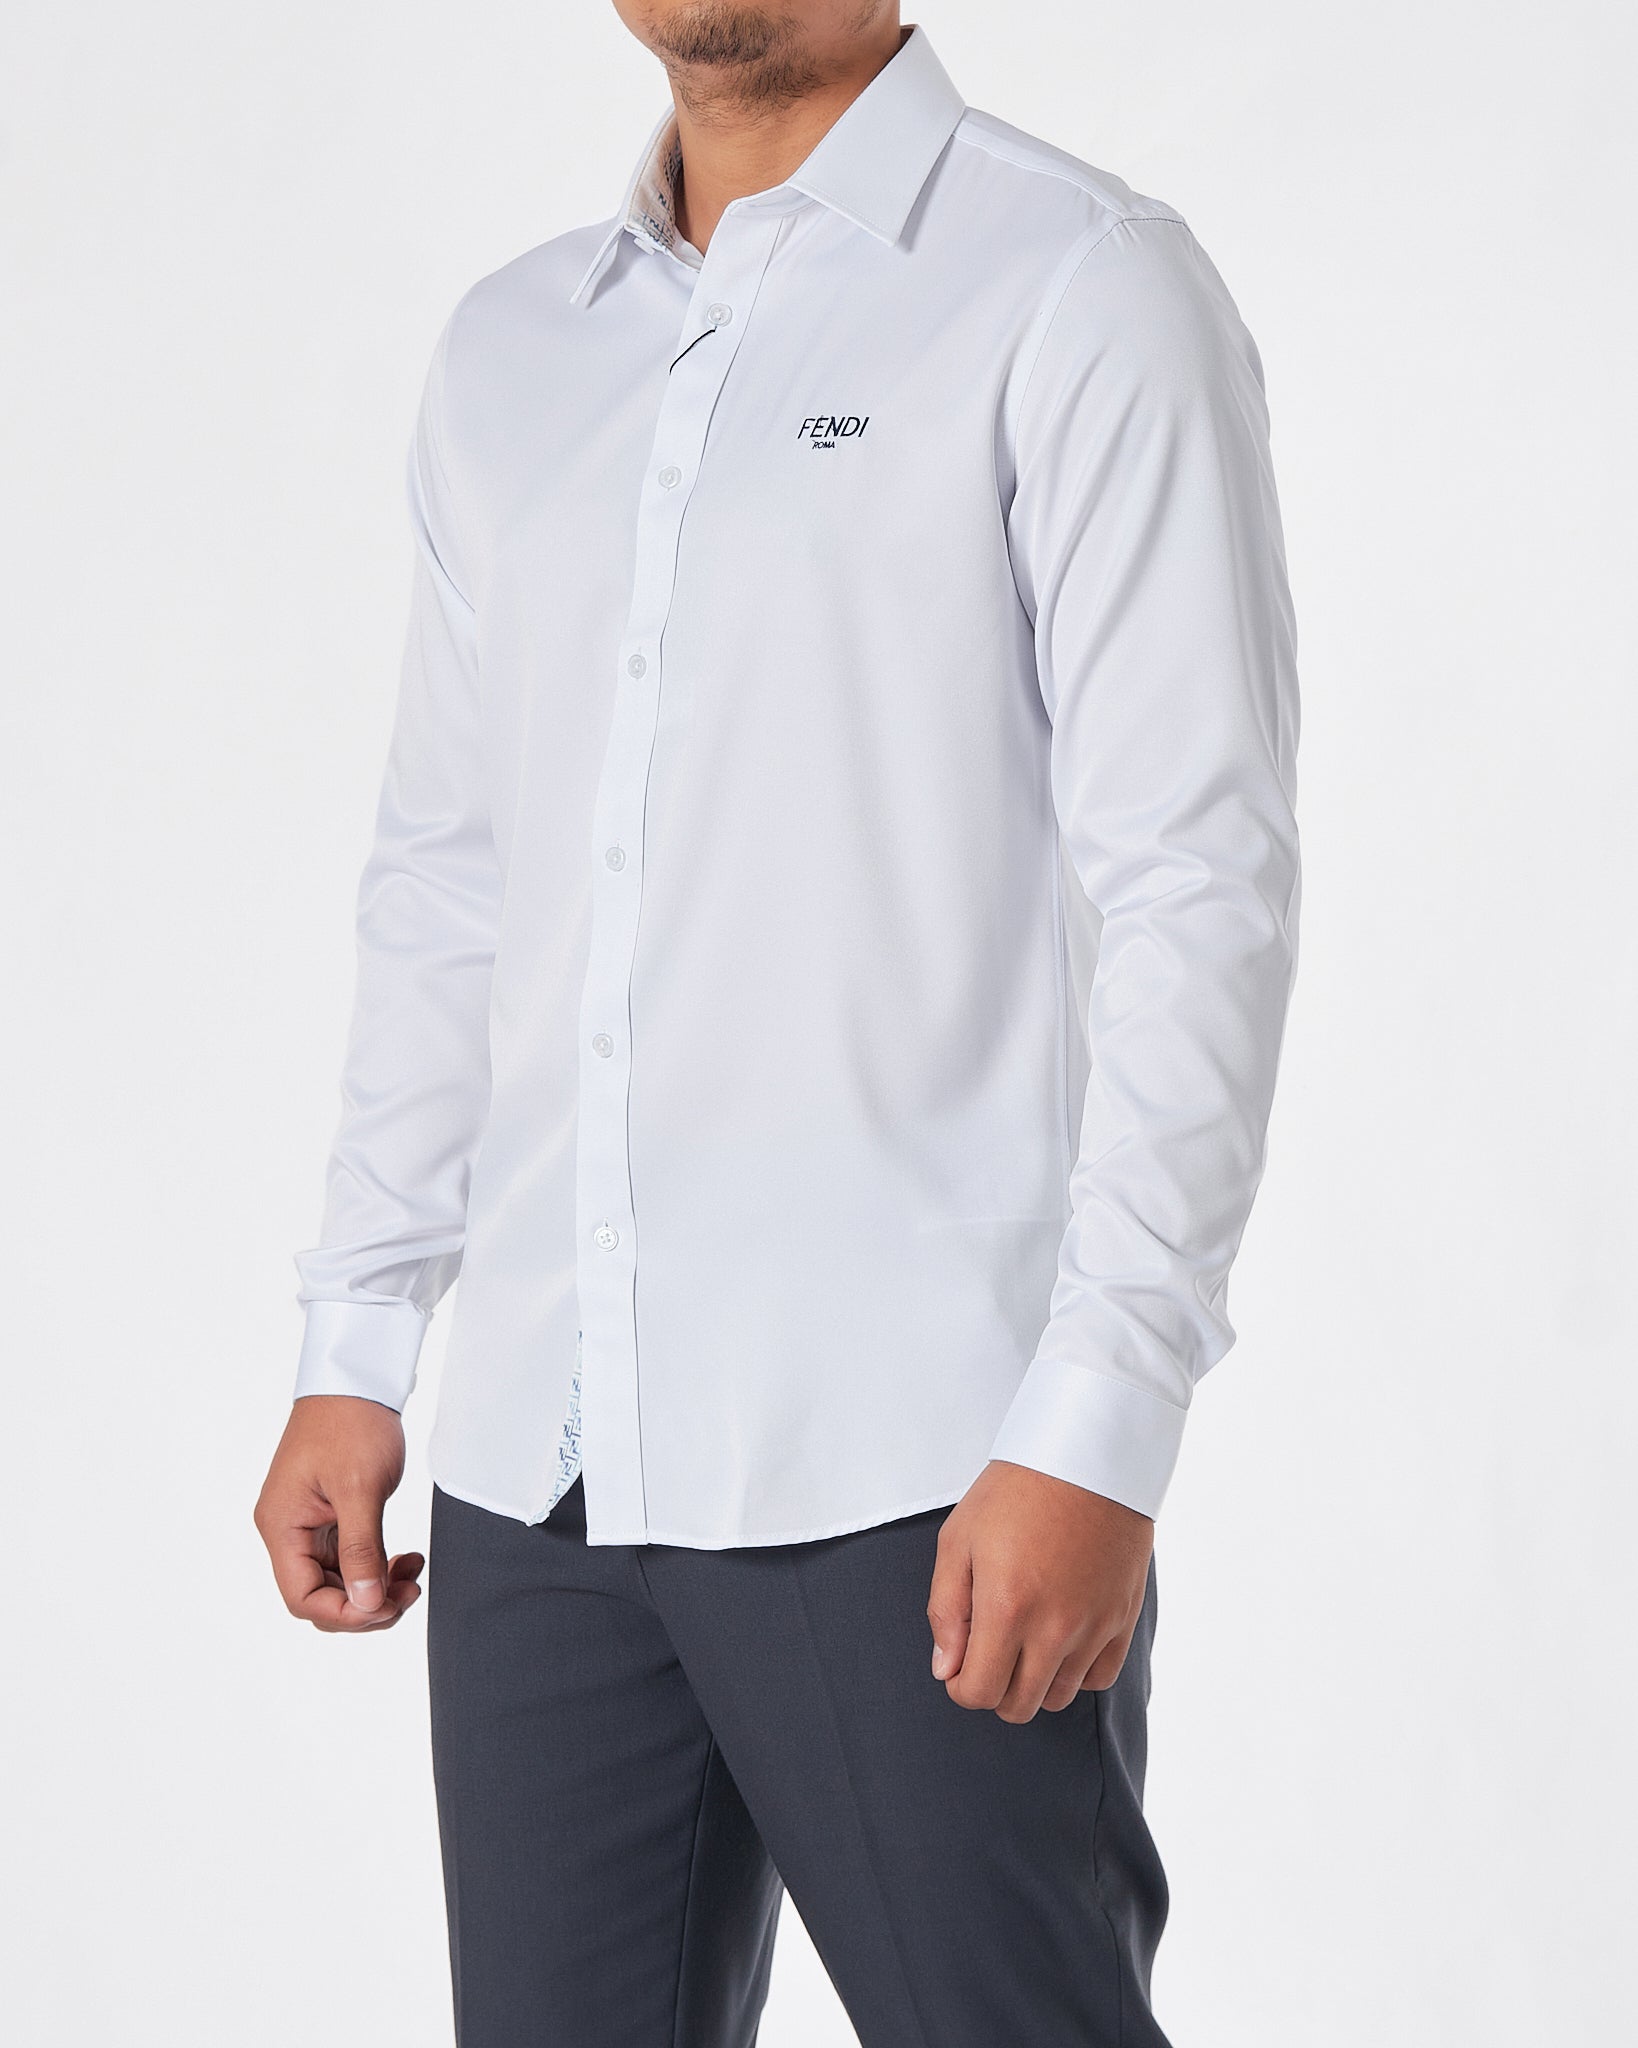 FEN Logo Embroidered Men White Shirts Long Sleeve 22.90